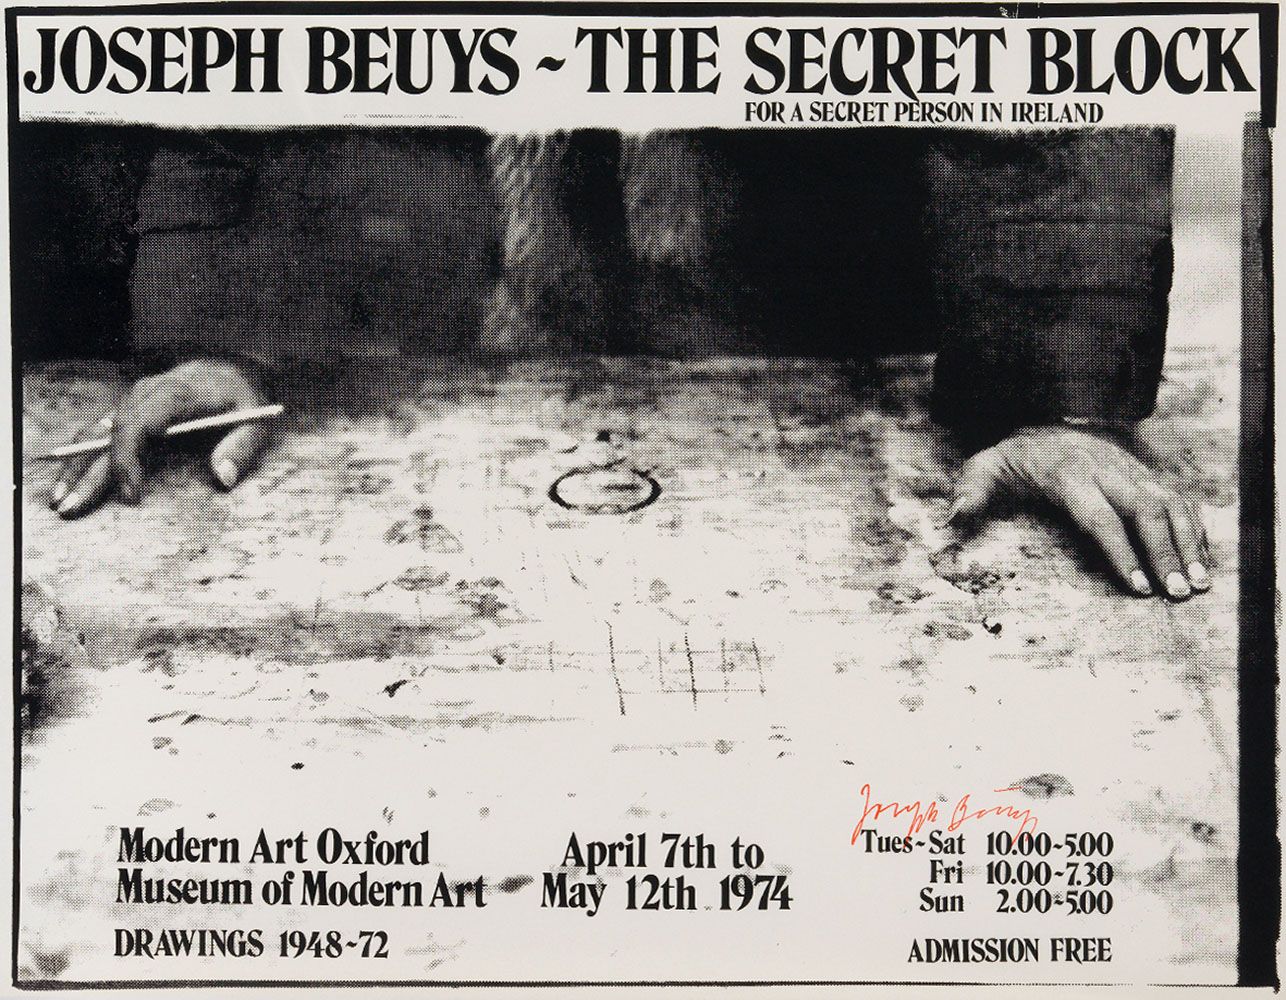 Beuys, Joseph Beuys, Joseph(1921-1986).爱尔兰的一个秘密人的秘密街区。海报，牛津现代艺术博物馆，1974年。 红墨水签名。&hellip;